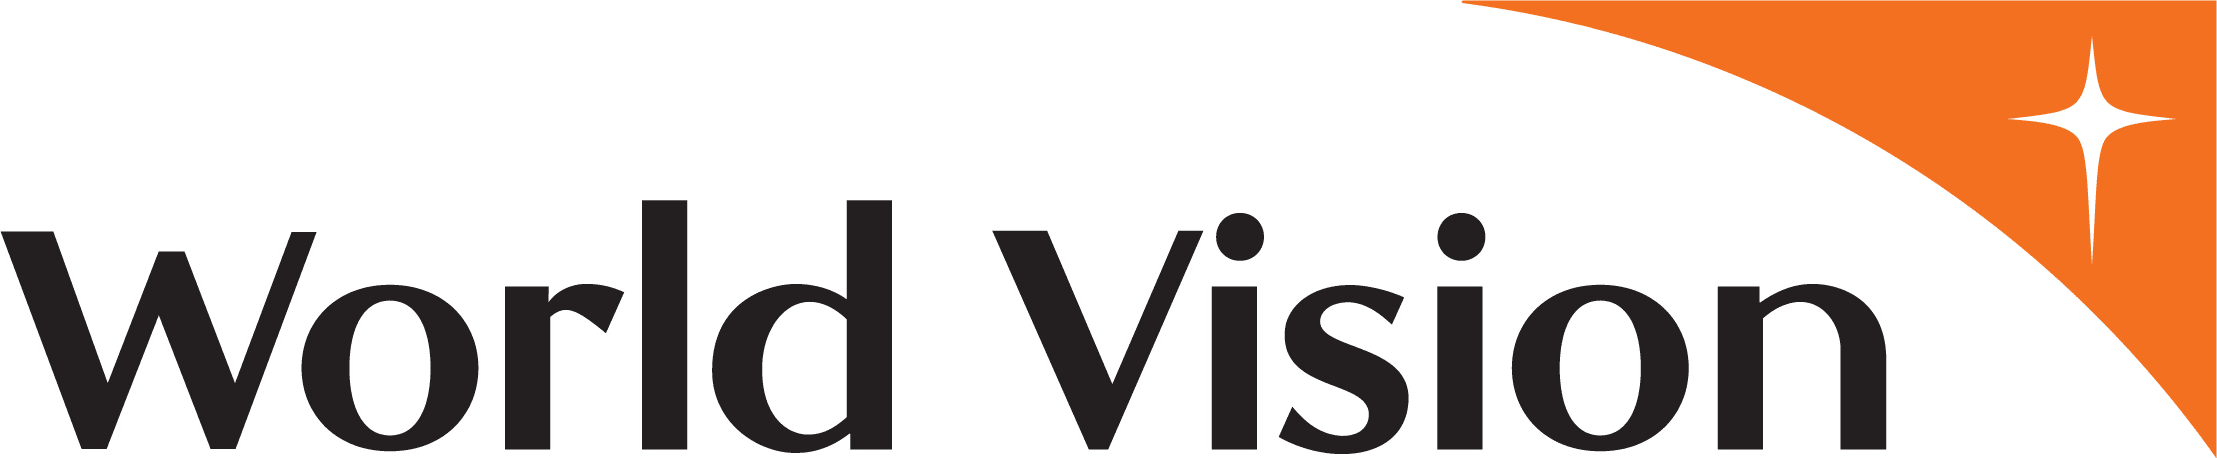 World_Vision_new_logo